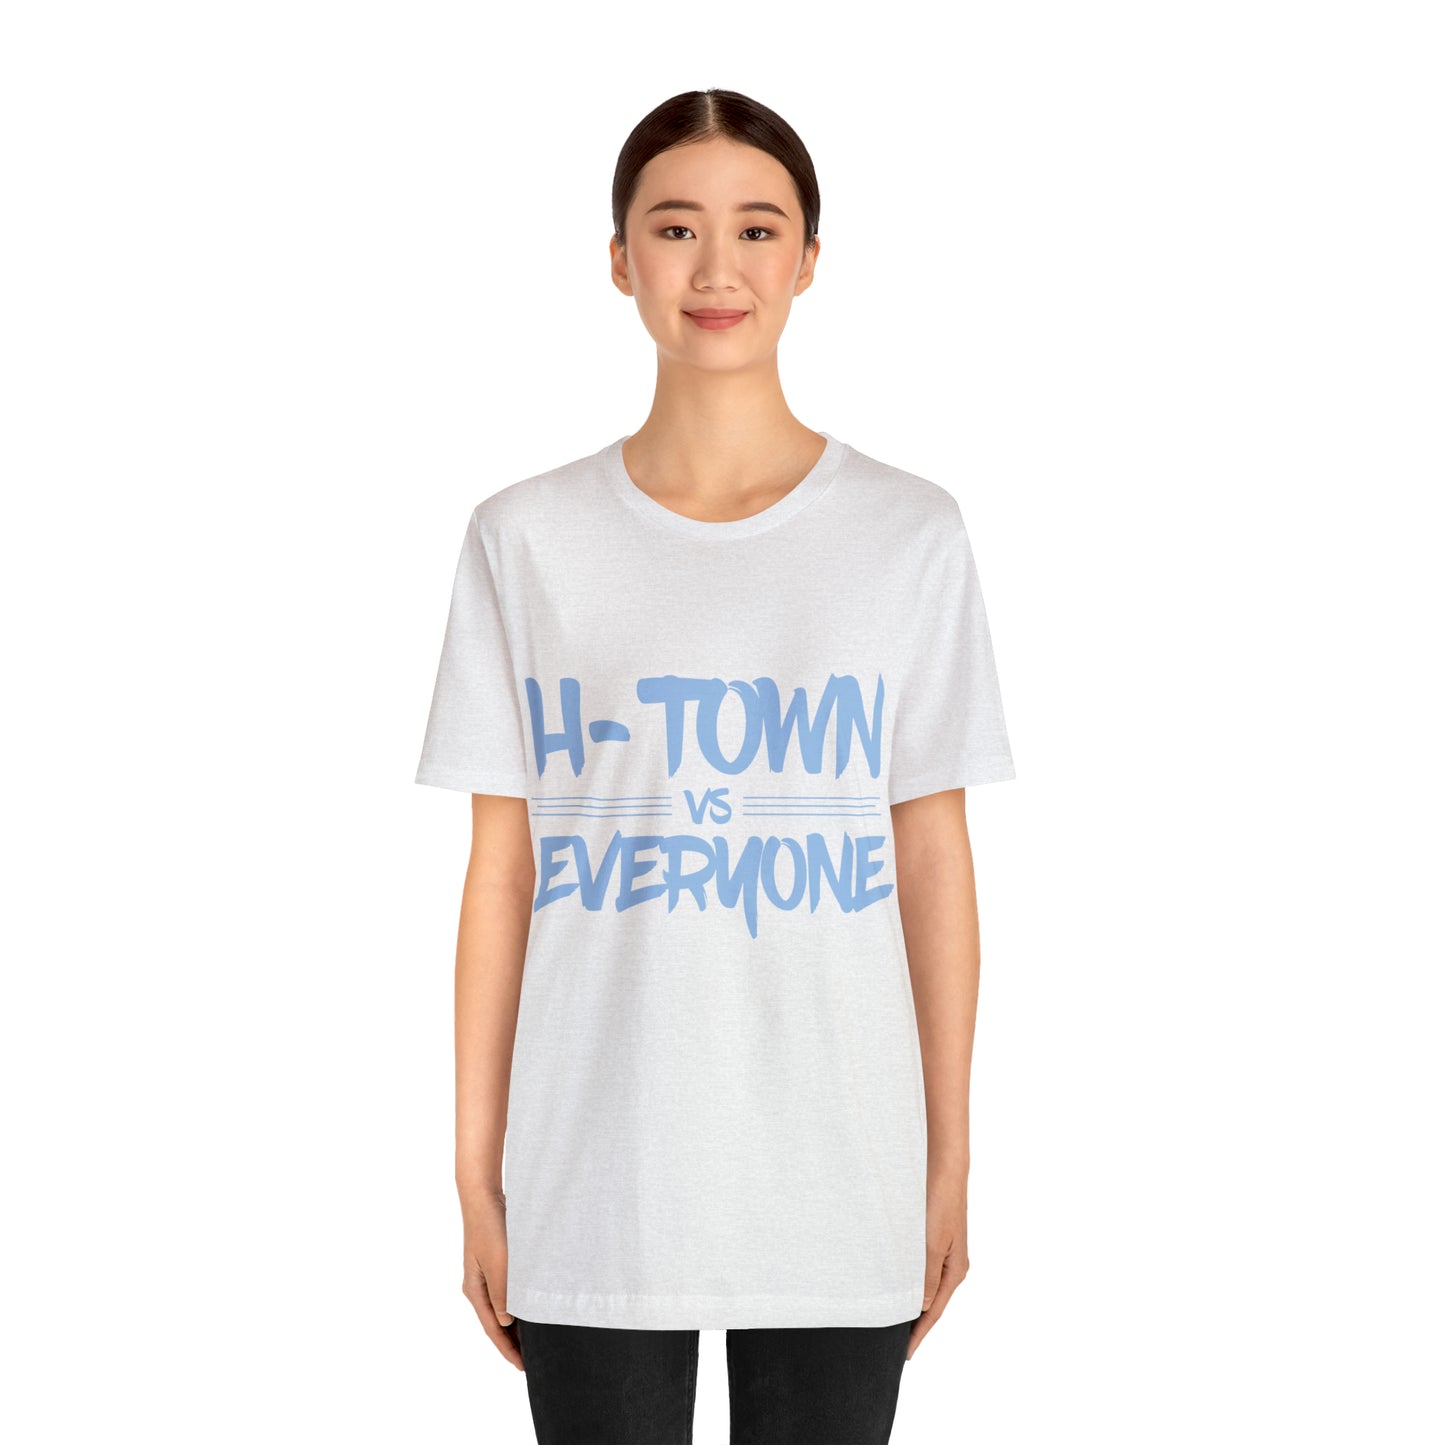 H-Town vs Everyone Unisex Tee (Dash & Dynamo Colors)